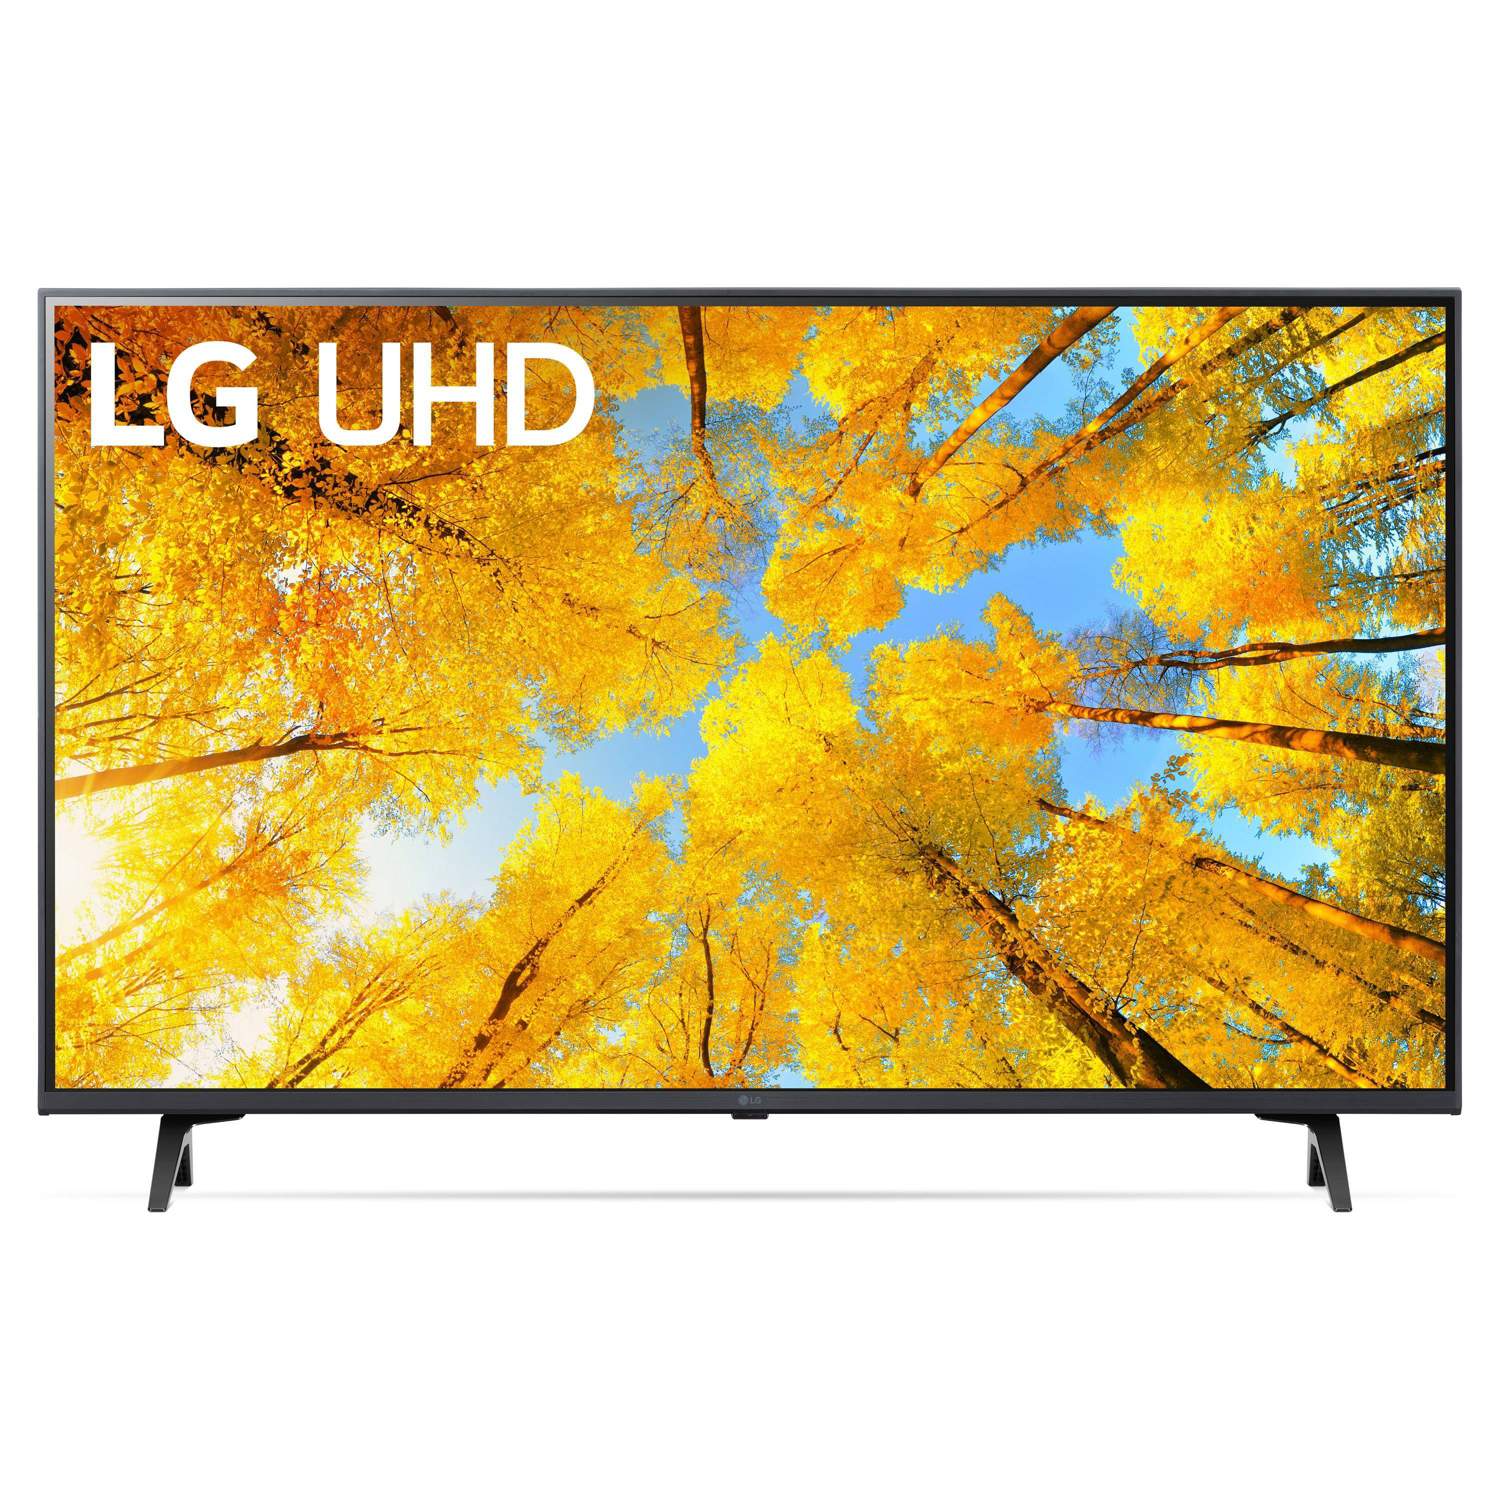 LG 43 inch UHD 4k TV LED 43UQ75 at Target In Store. $89 ymmv